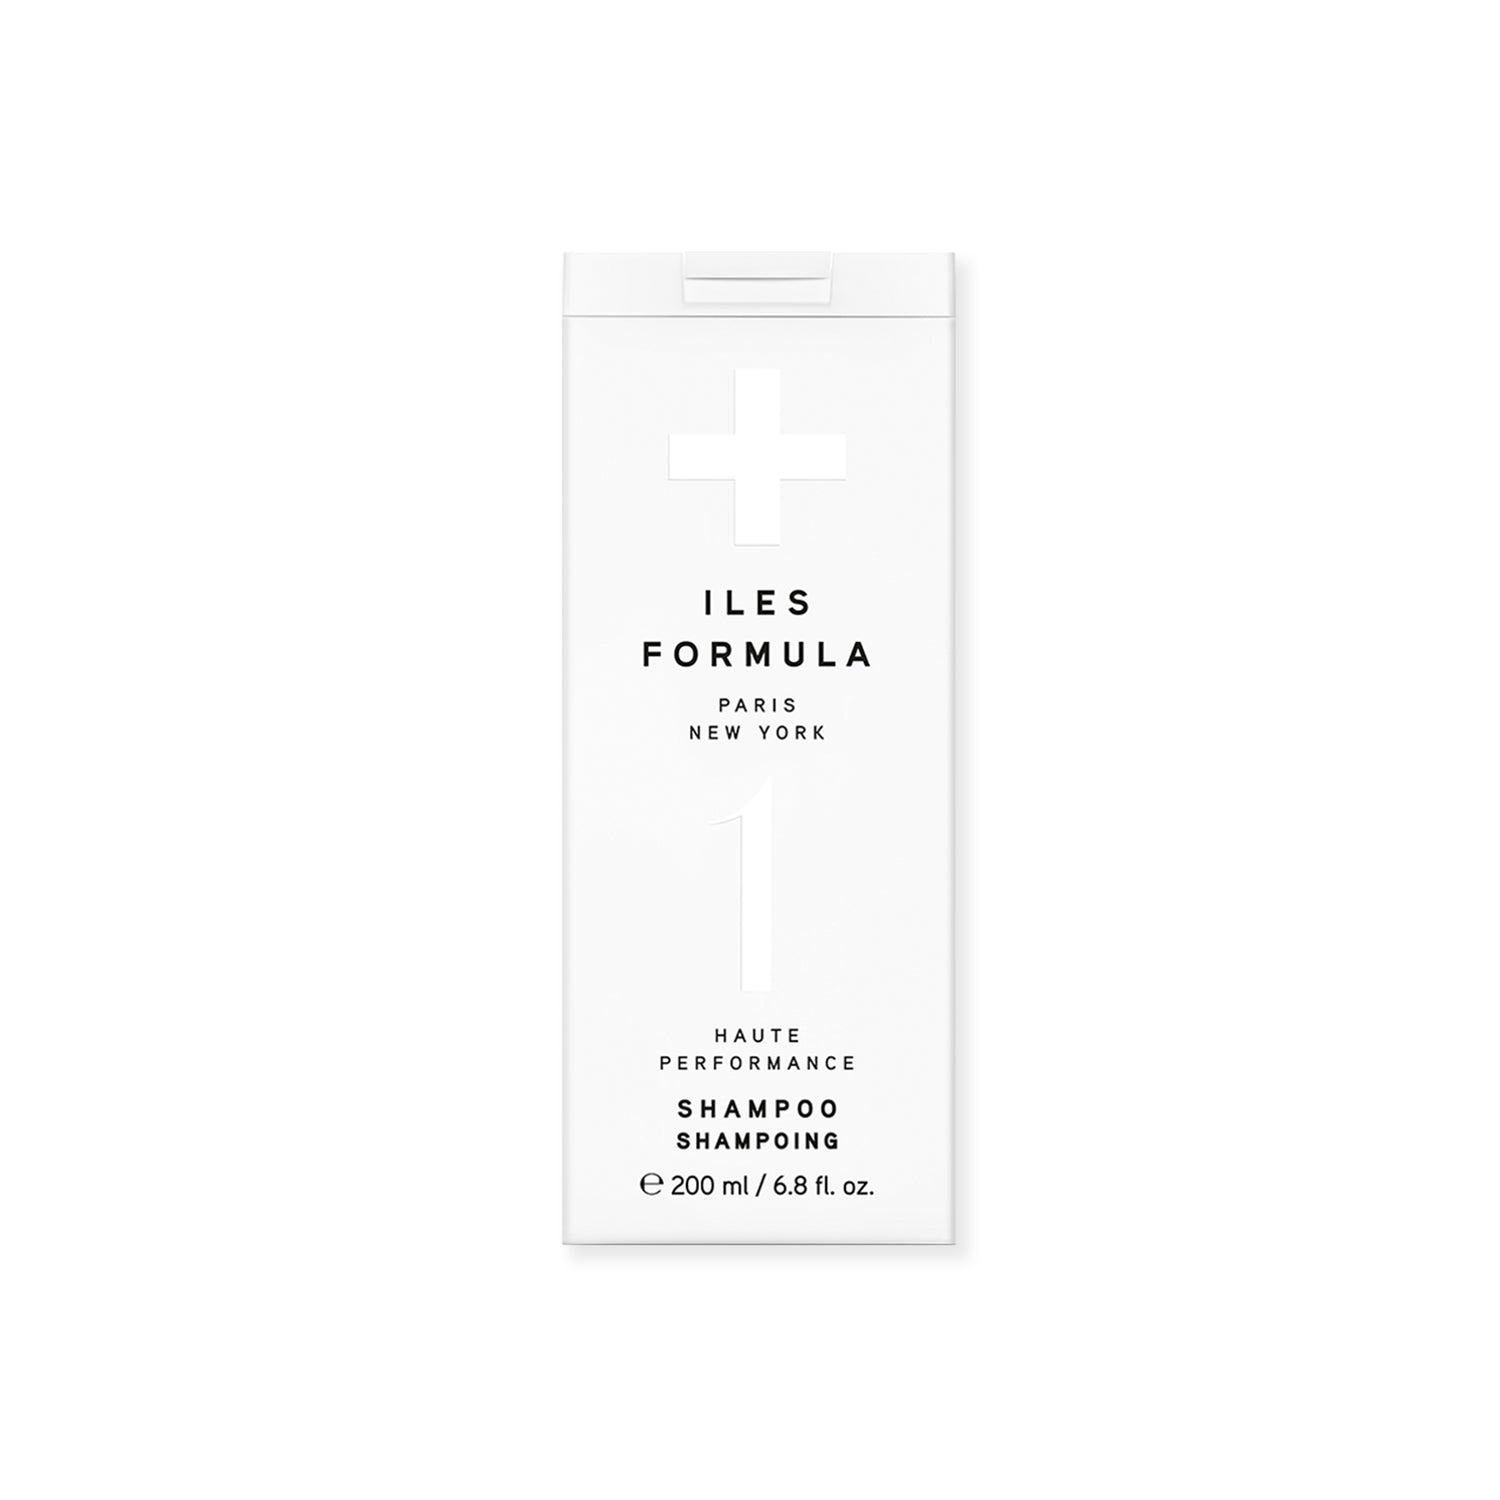 Iles Formula Shampoo - Remedy Oslo - parabenfri - silikonfri -sulfatfri shampoo